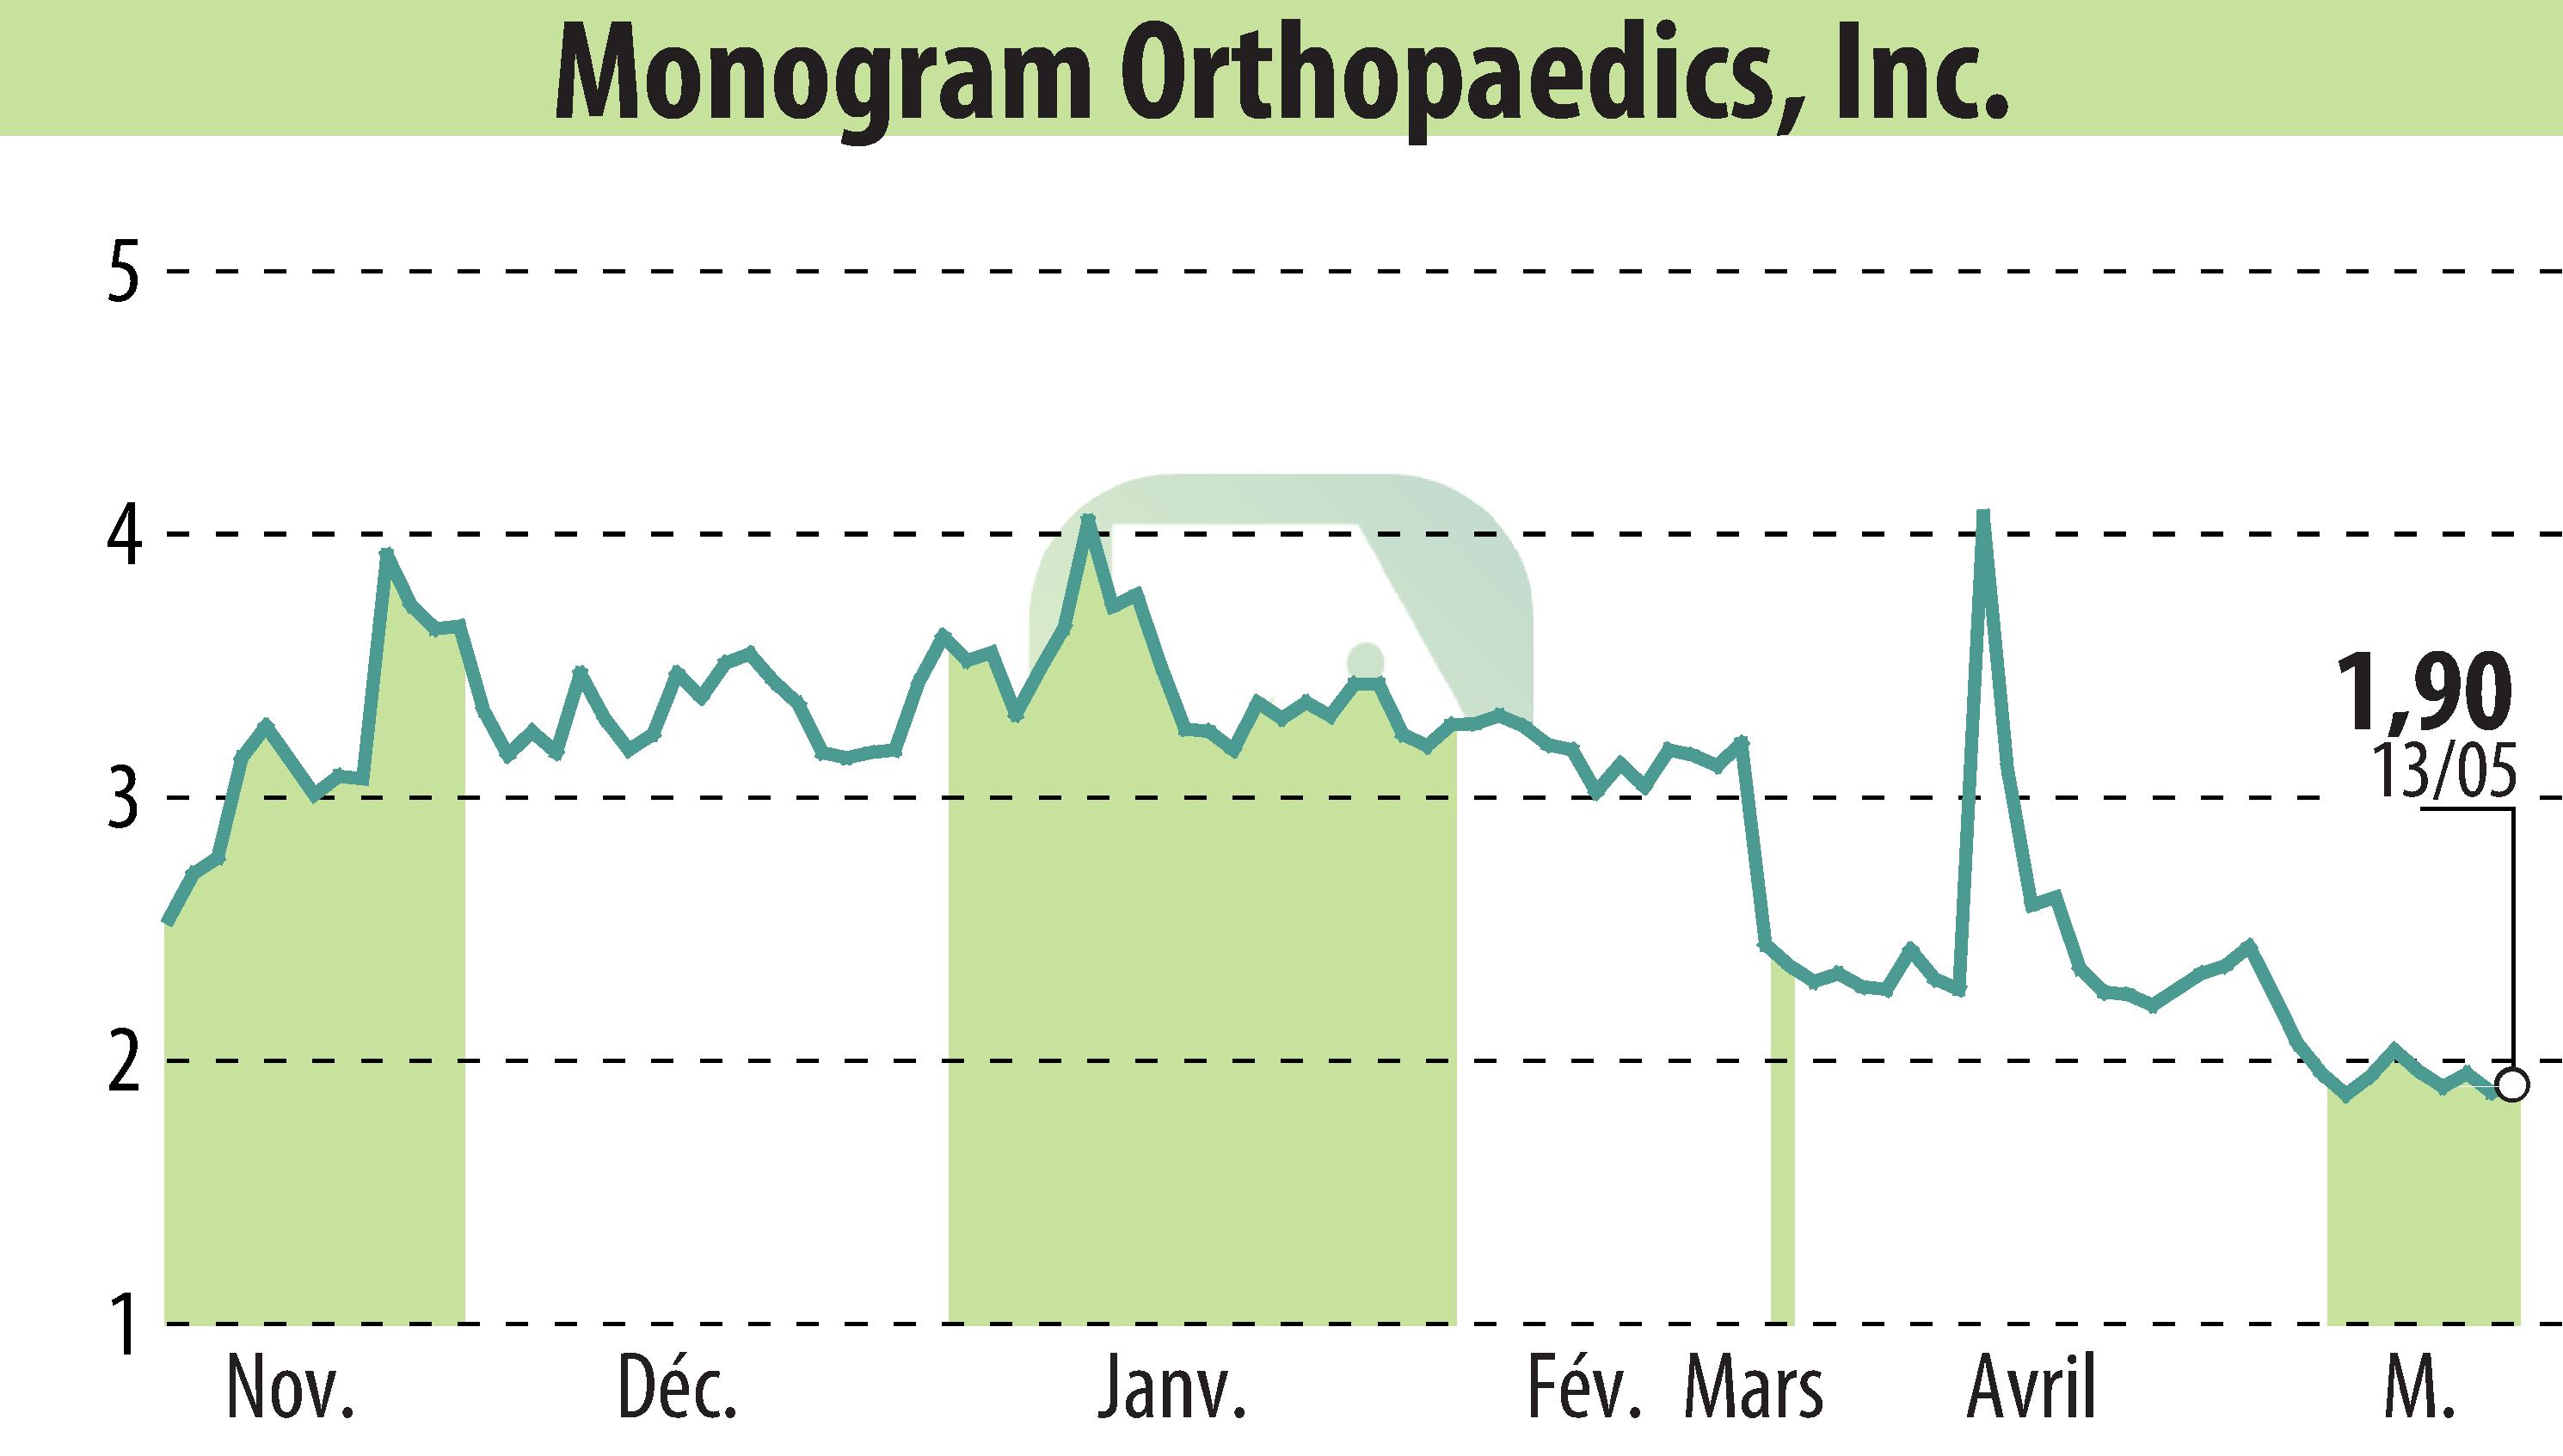 Stock price chart of MONOGRAM ORTHOPAEDICS INC (EBR:MGRM) showing fluctuations.